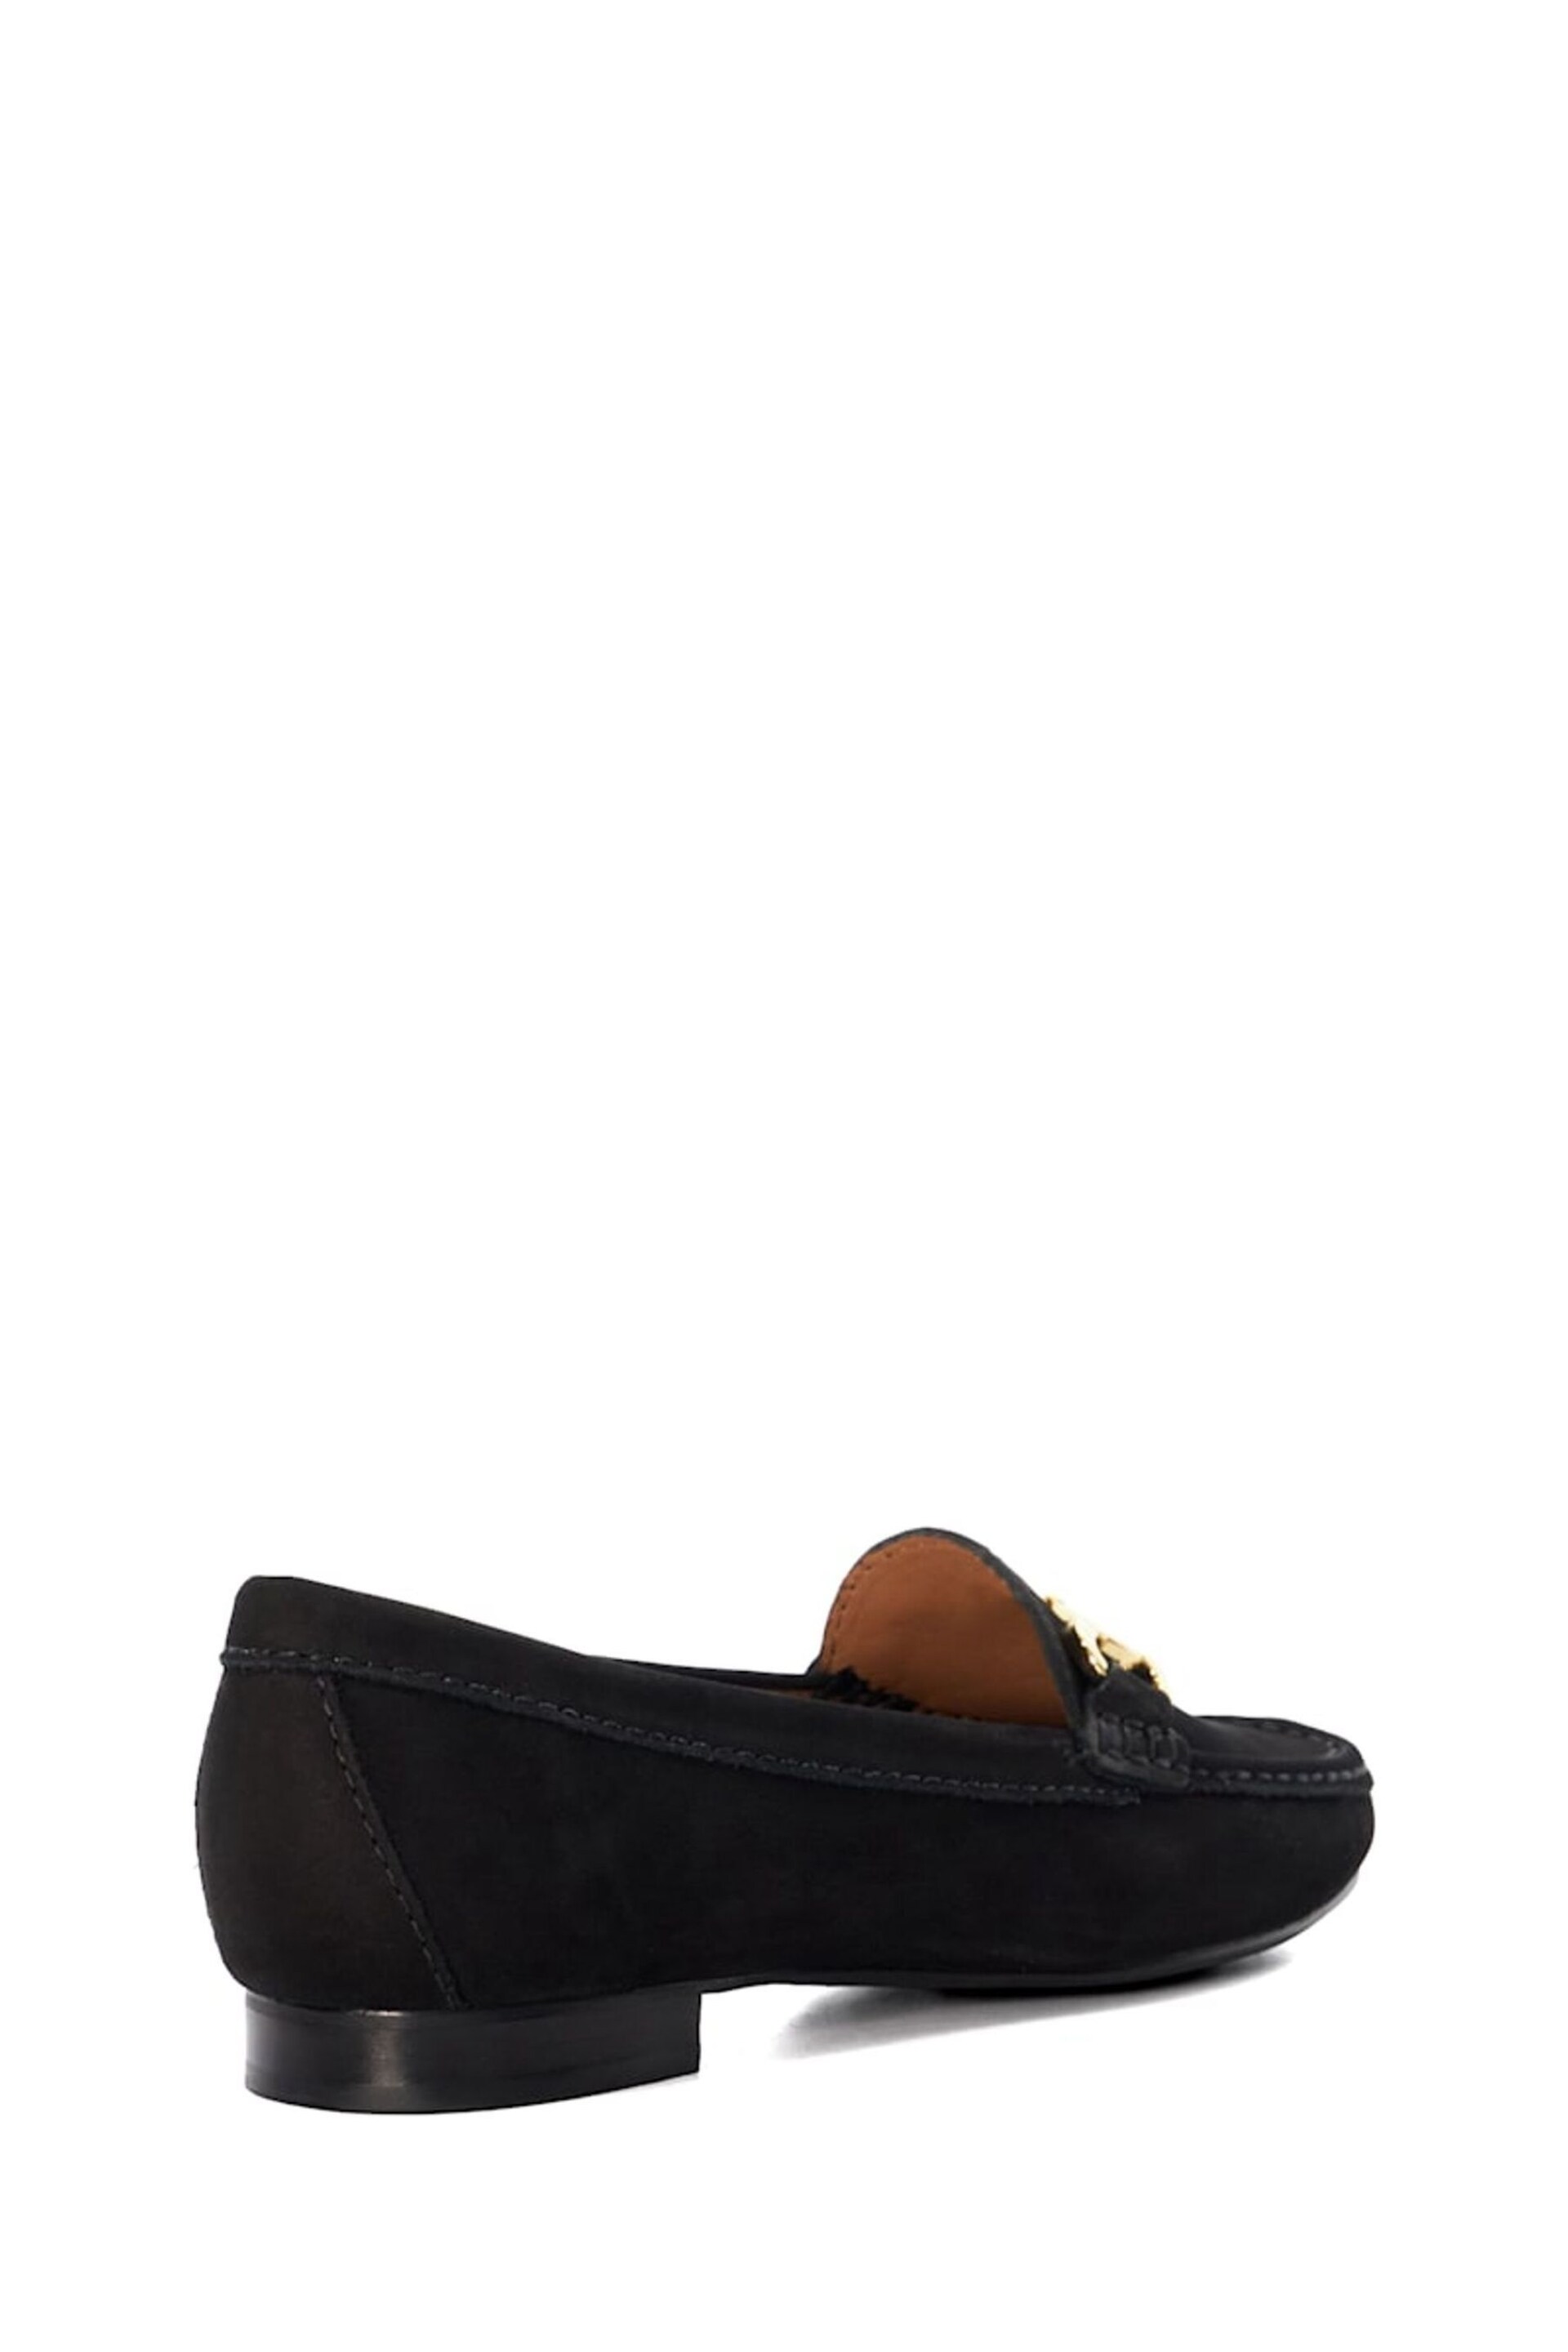 Dune London Black Glenniee Comfort Snaffle Loafers - Image 5 of 7